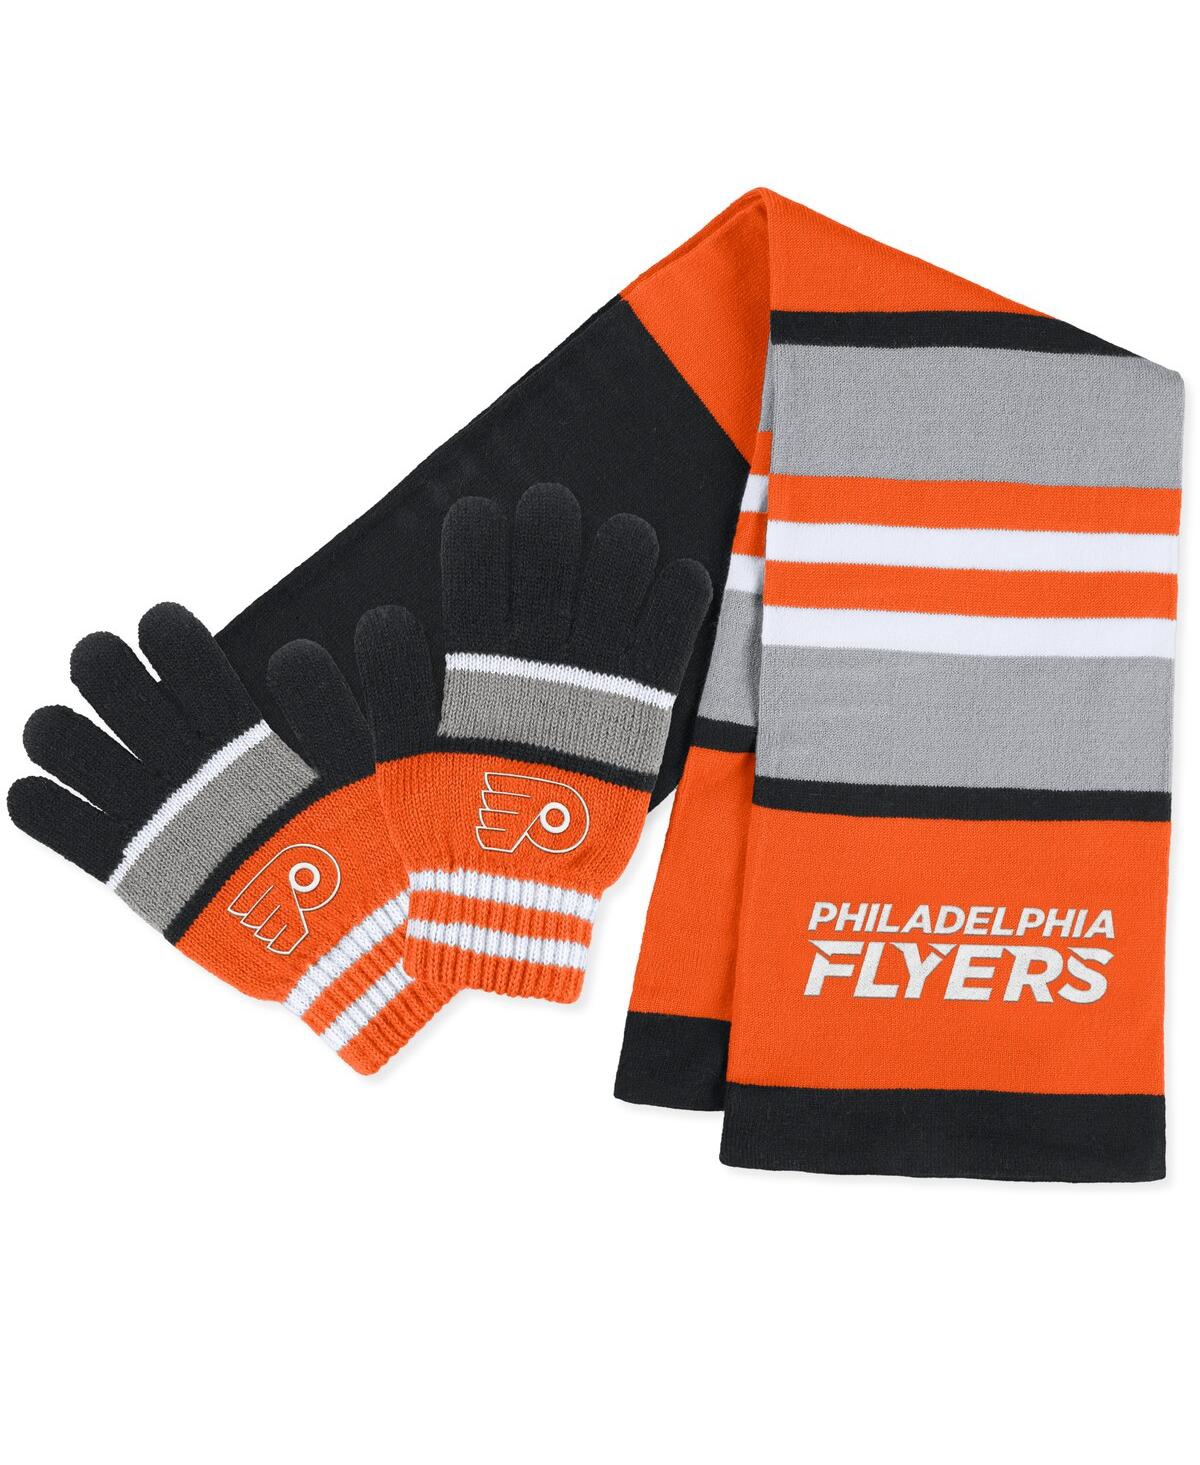 Women's Wear by Erin Andrews Philadelphia Flyers Stripe Glove and Scarf Set - Orange, Black